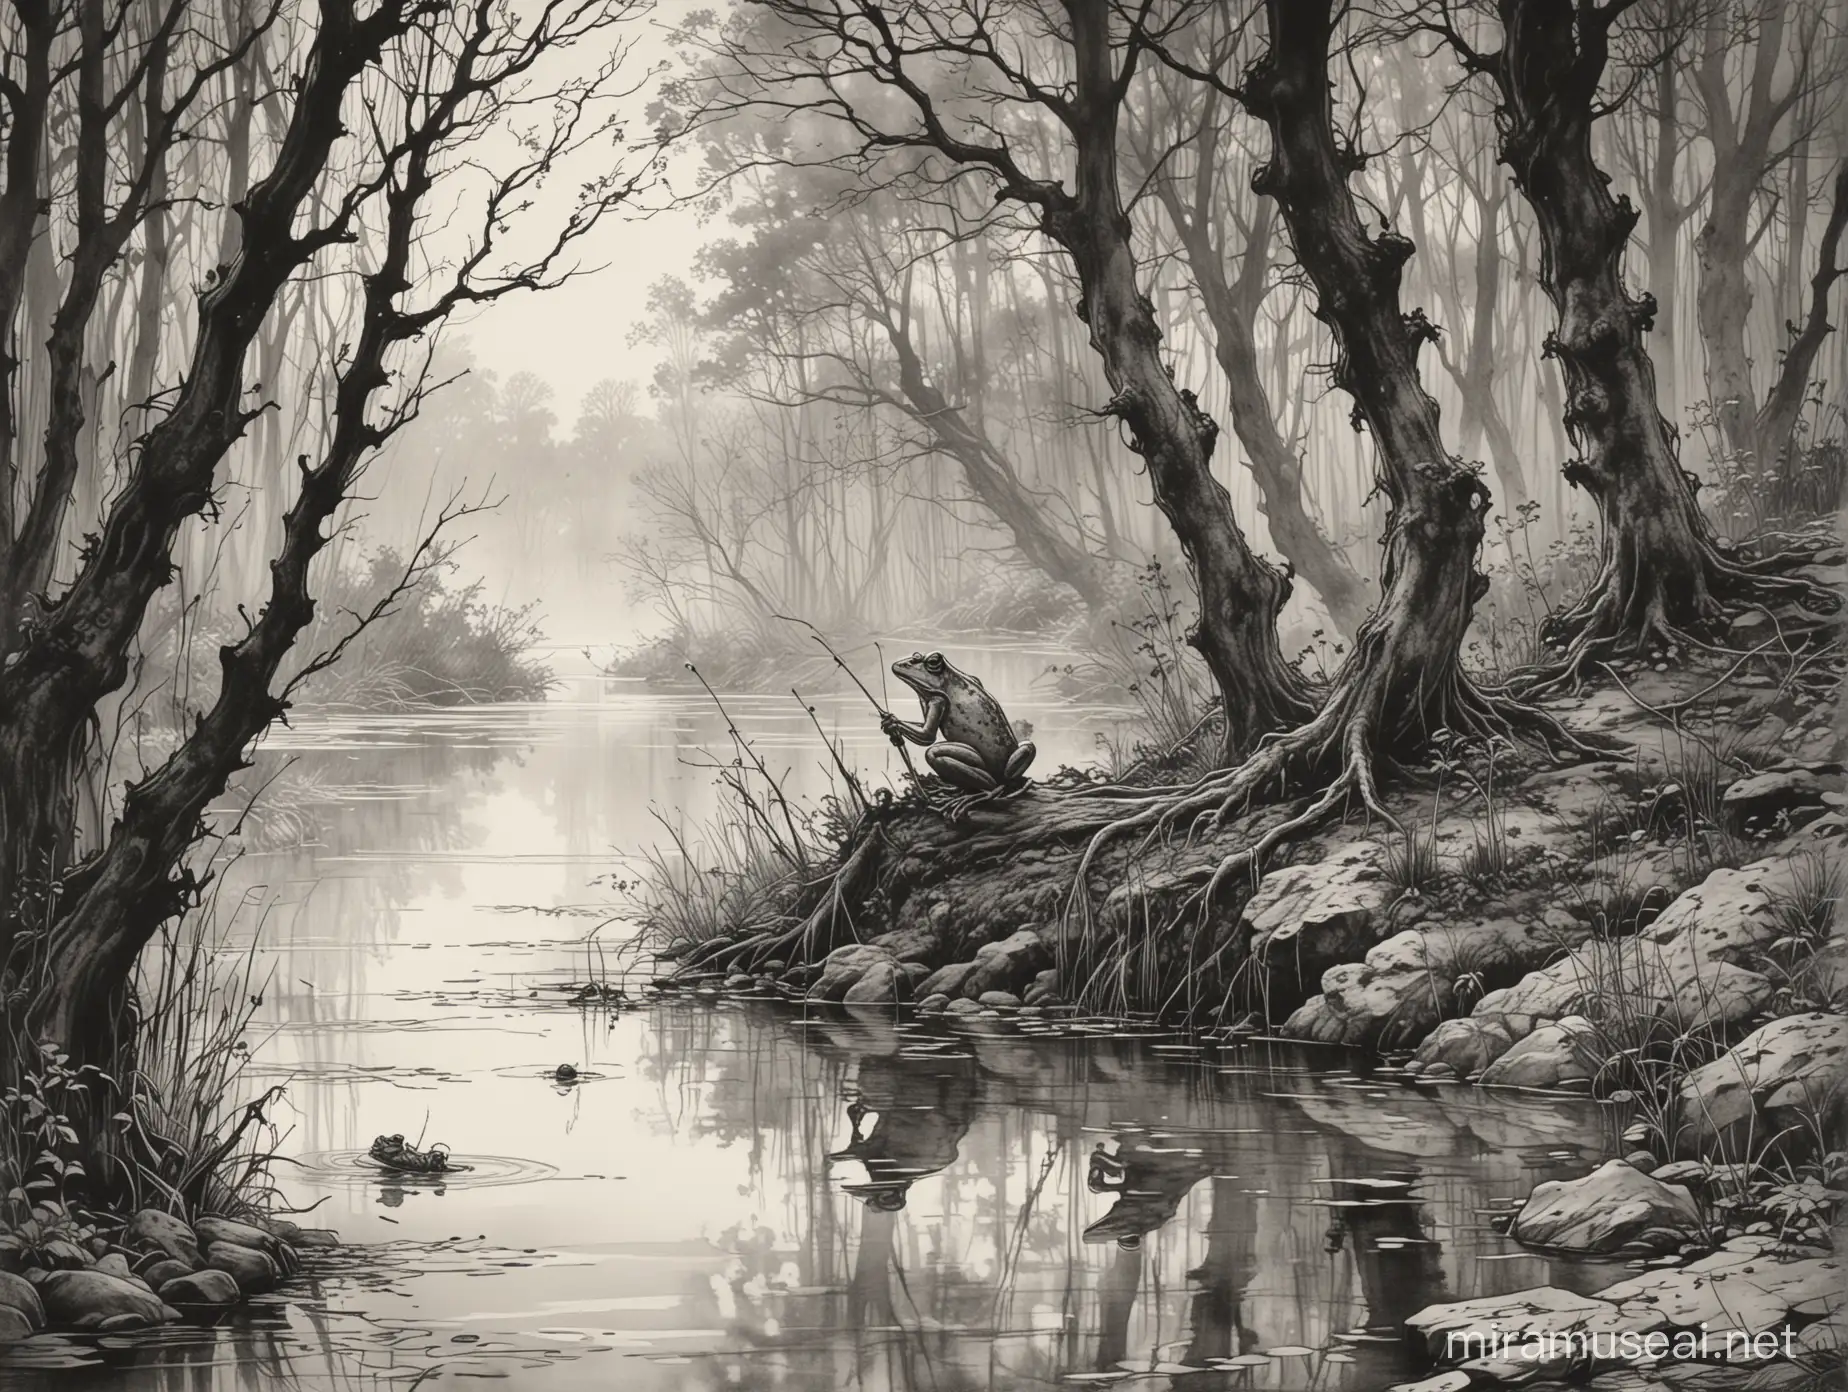 Enchanting Scene Frog Fishing Along the Riverbank in an Arthur Rackham Style Forest